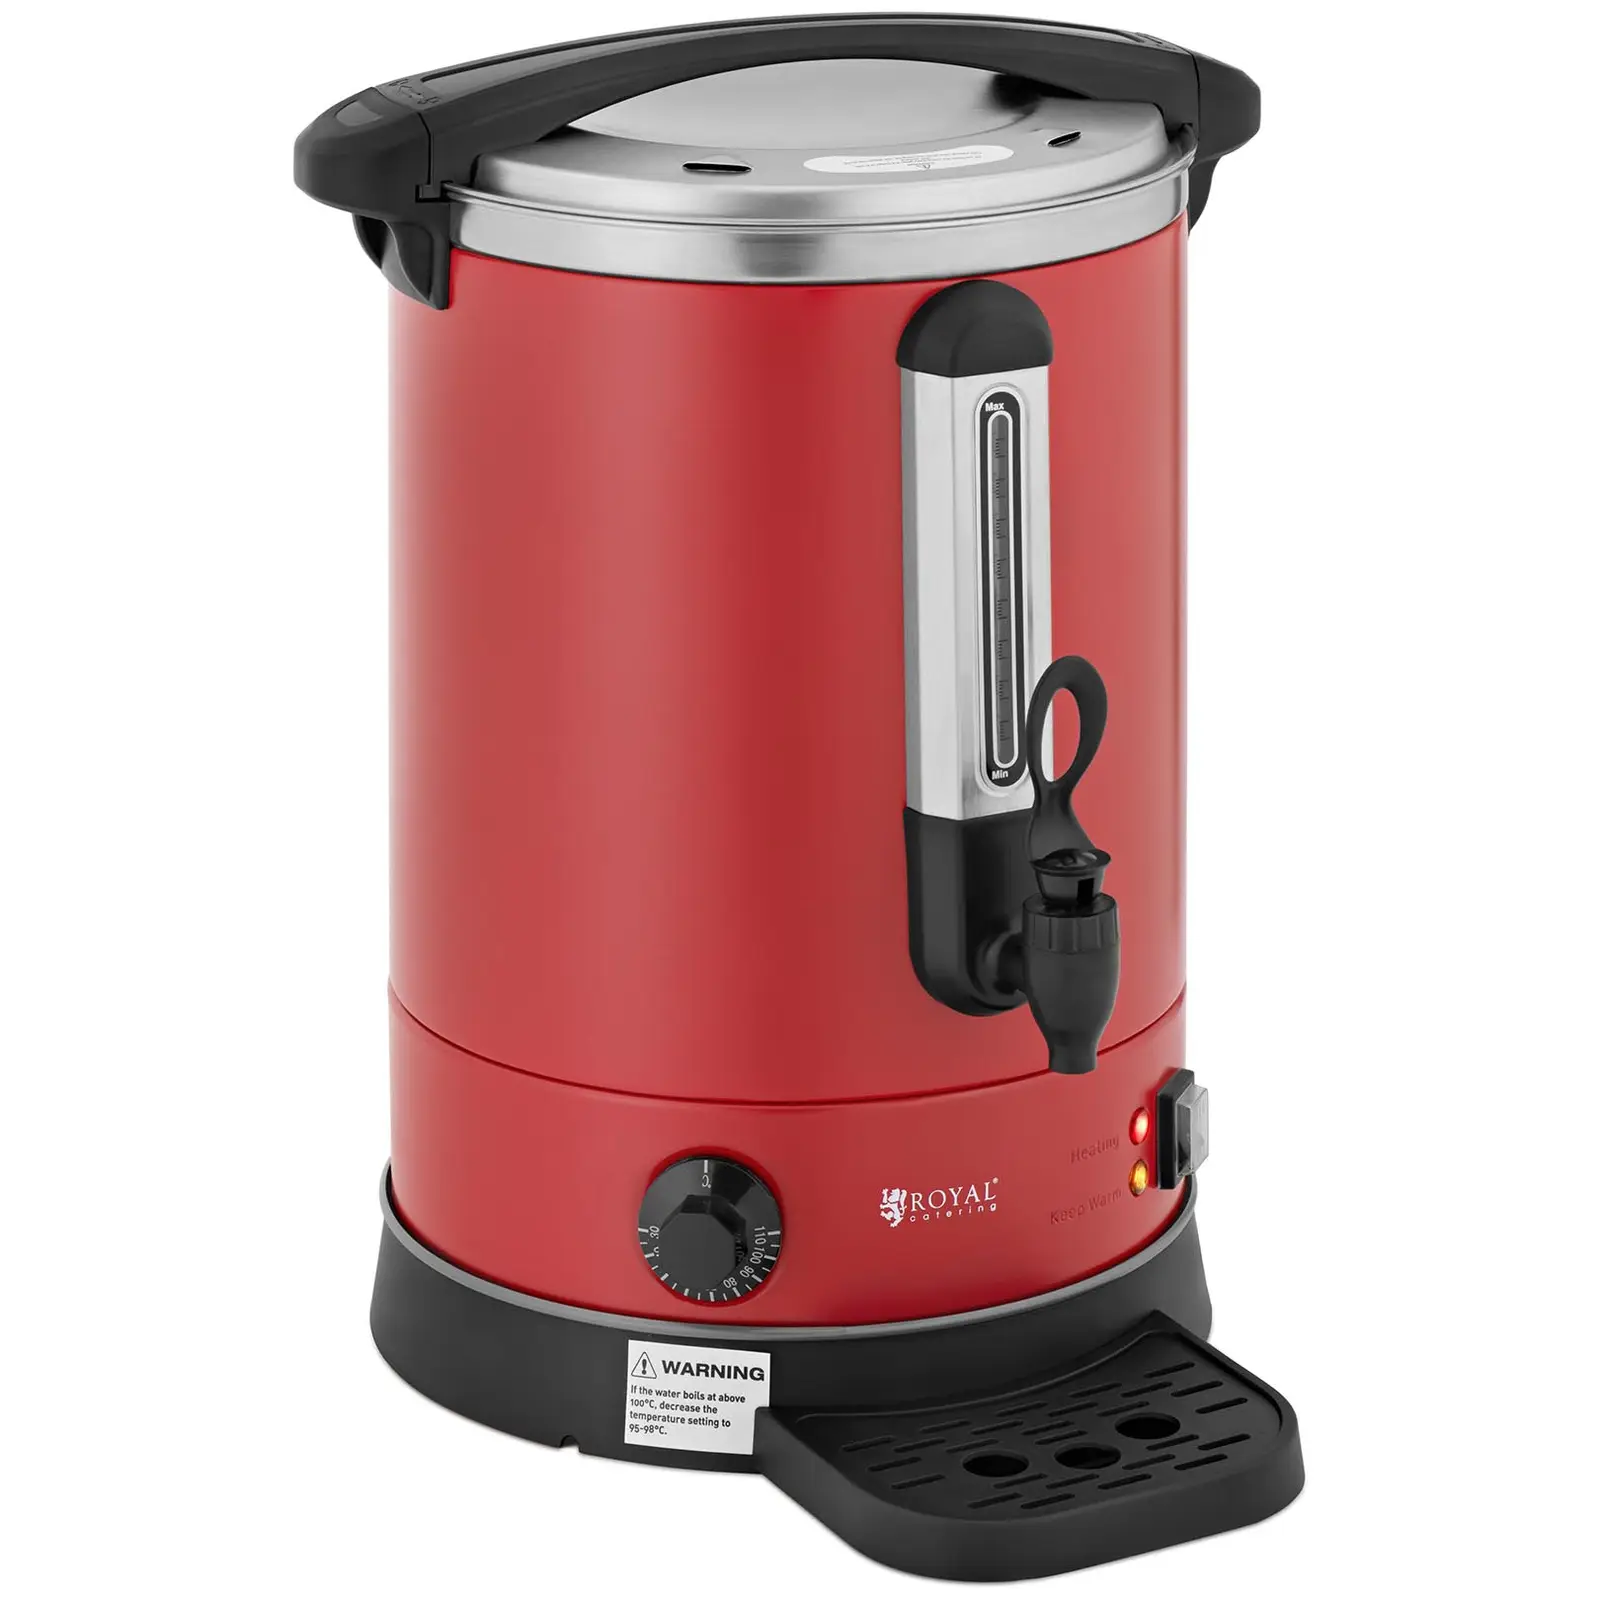 Hot water dispenser - 13.5 L - 2500 W - Red